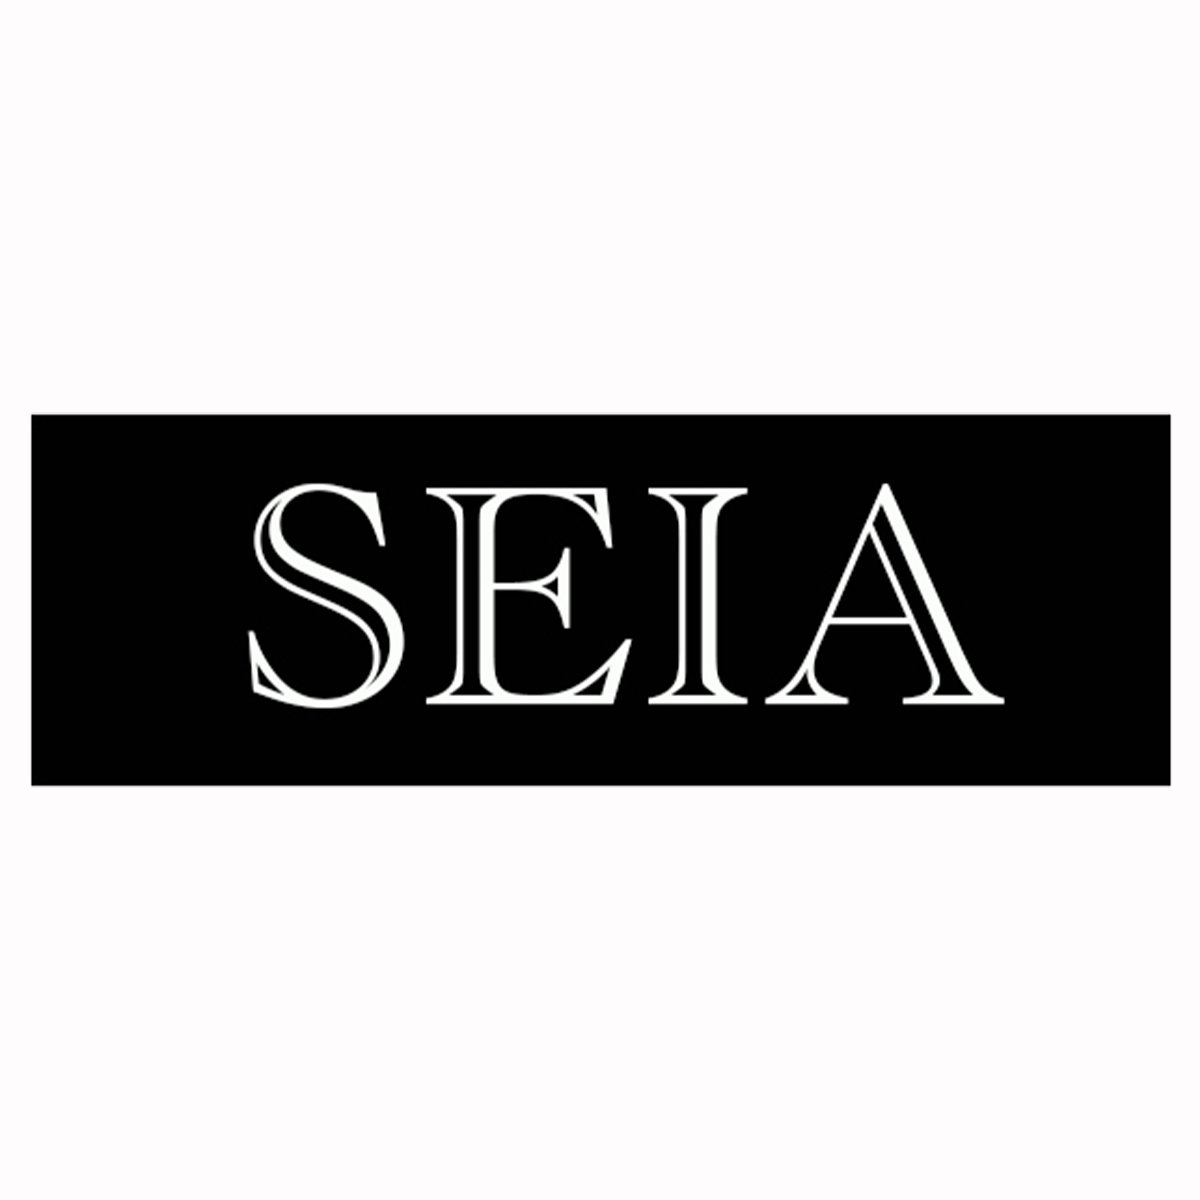 SEIA logo square.jpg